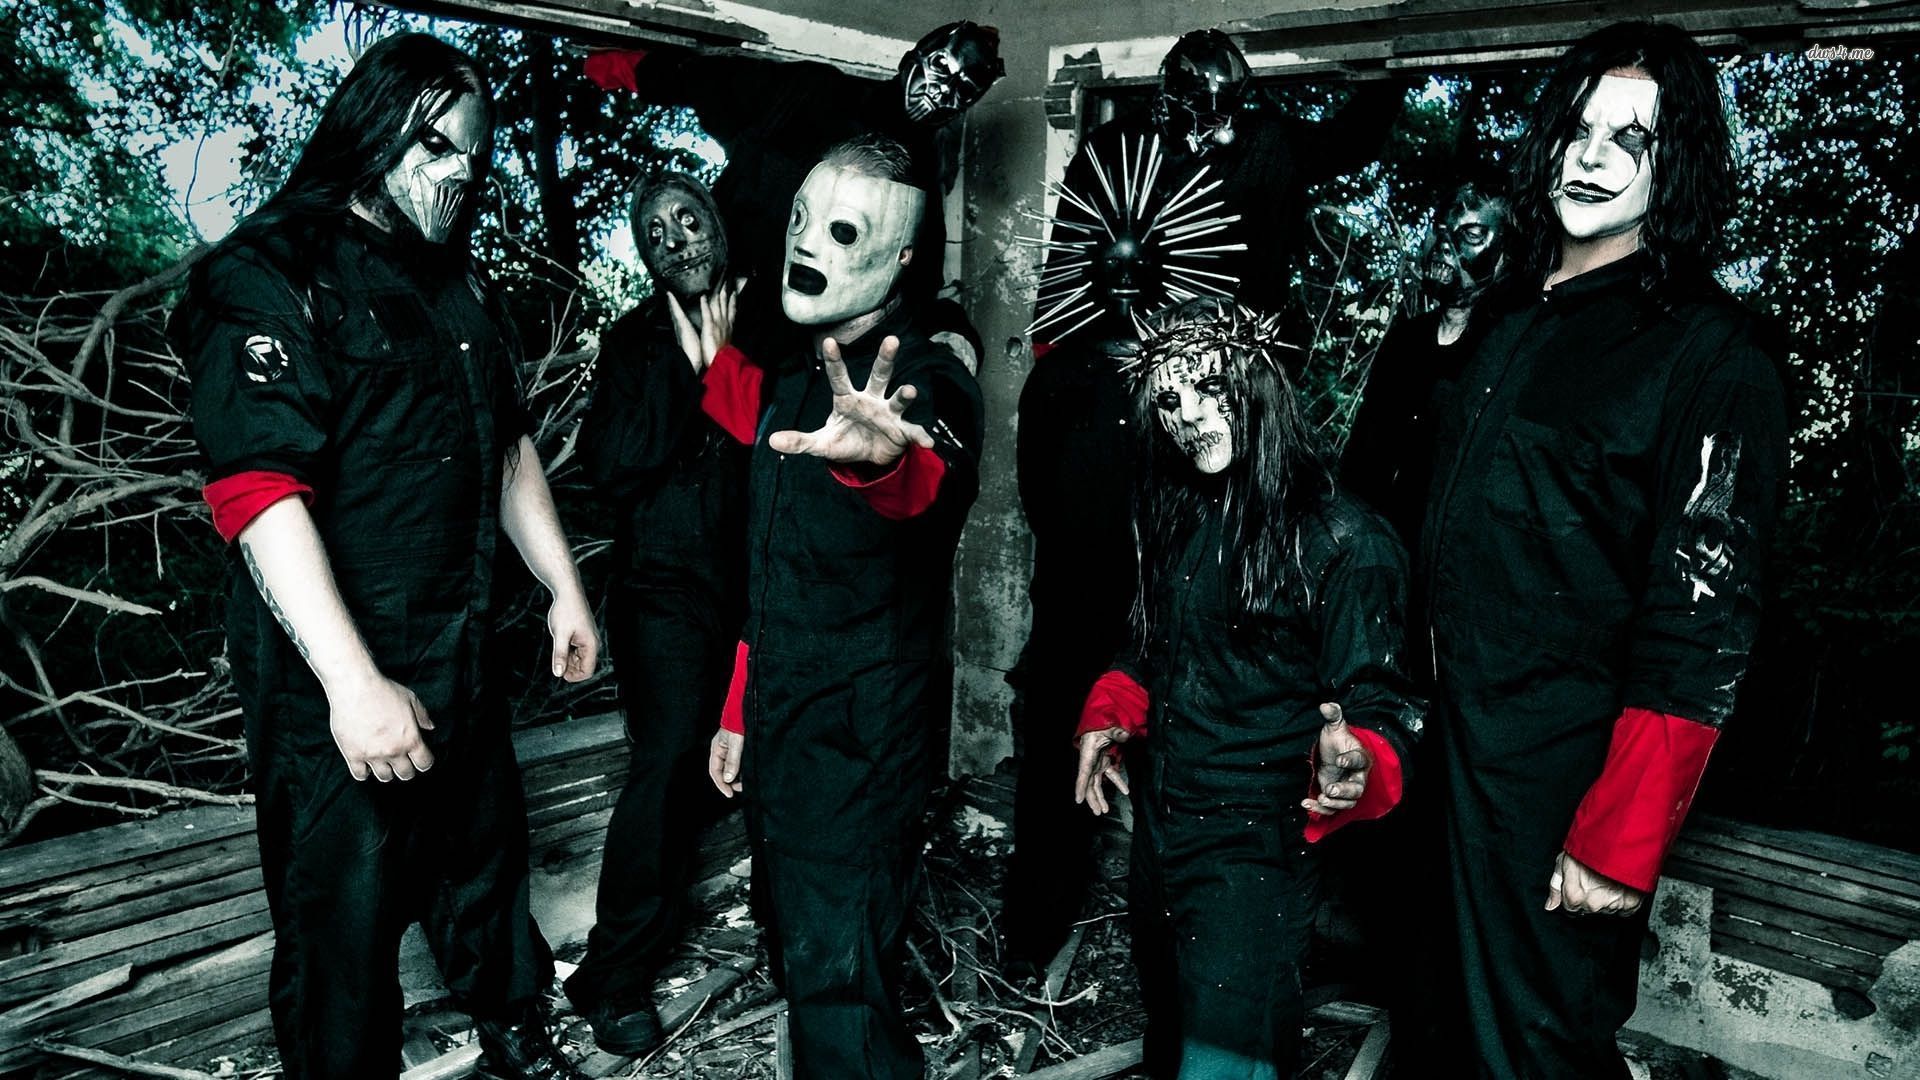 Slipknot Wallpaper Pictures Image